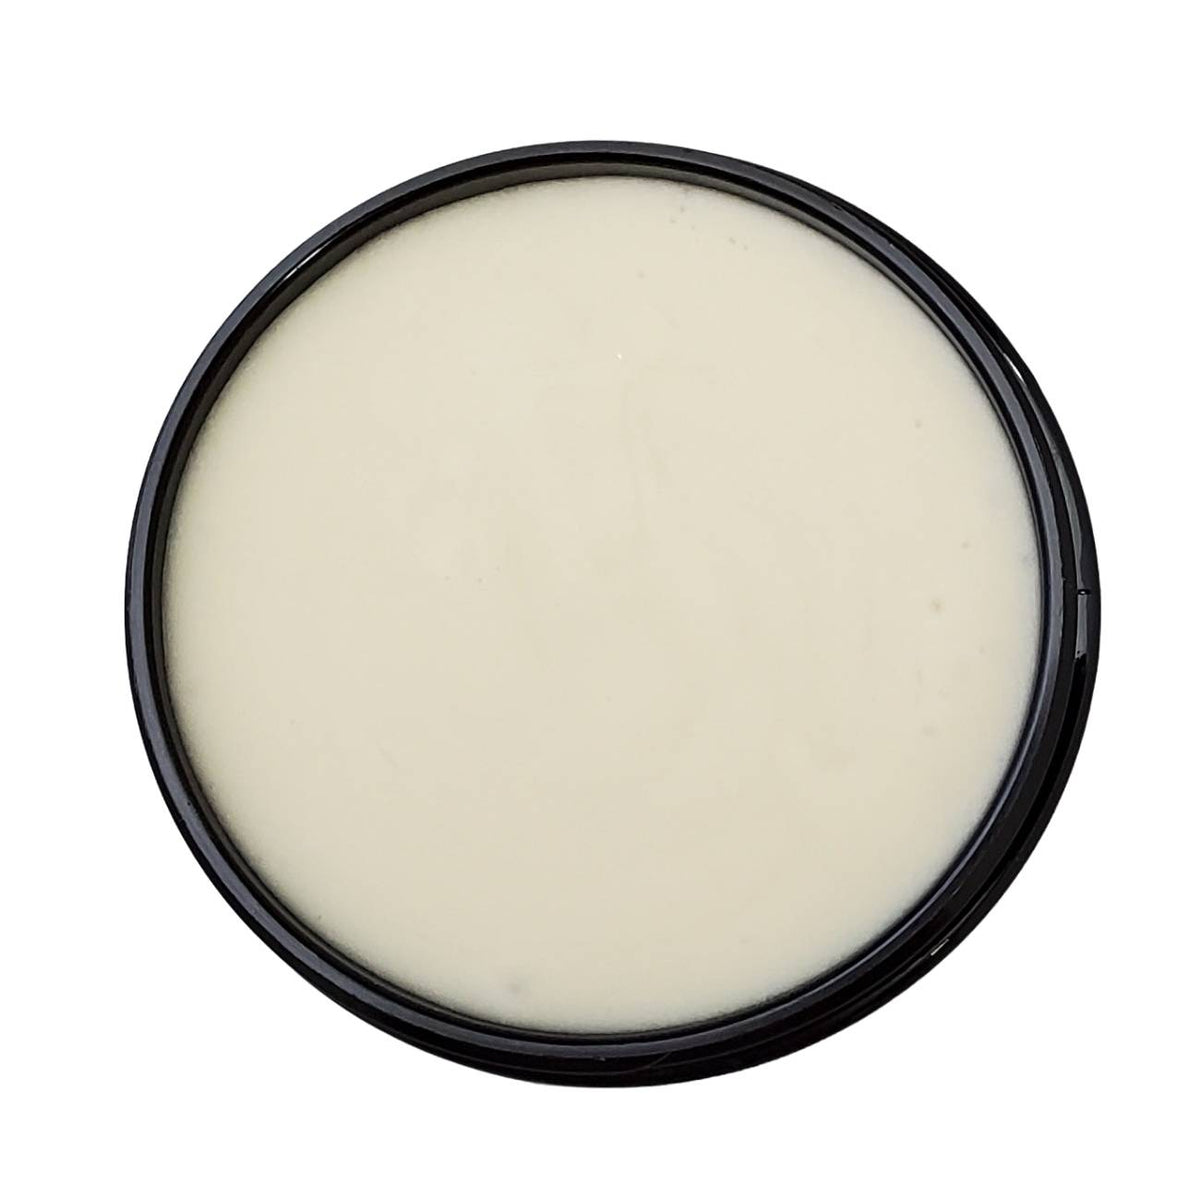 Whipped Shea Body Butter | Fern Valley Goat Milk Soap | Warm Vanilla Sugar Scent